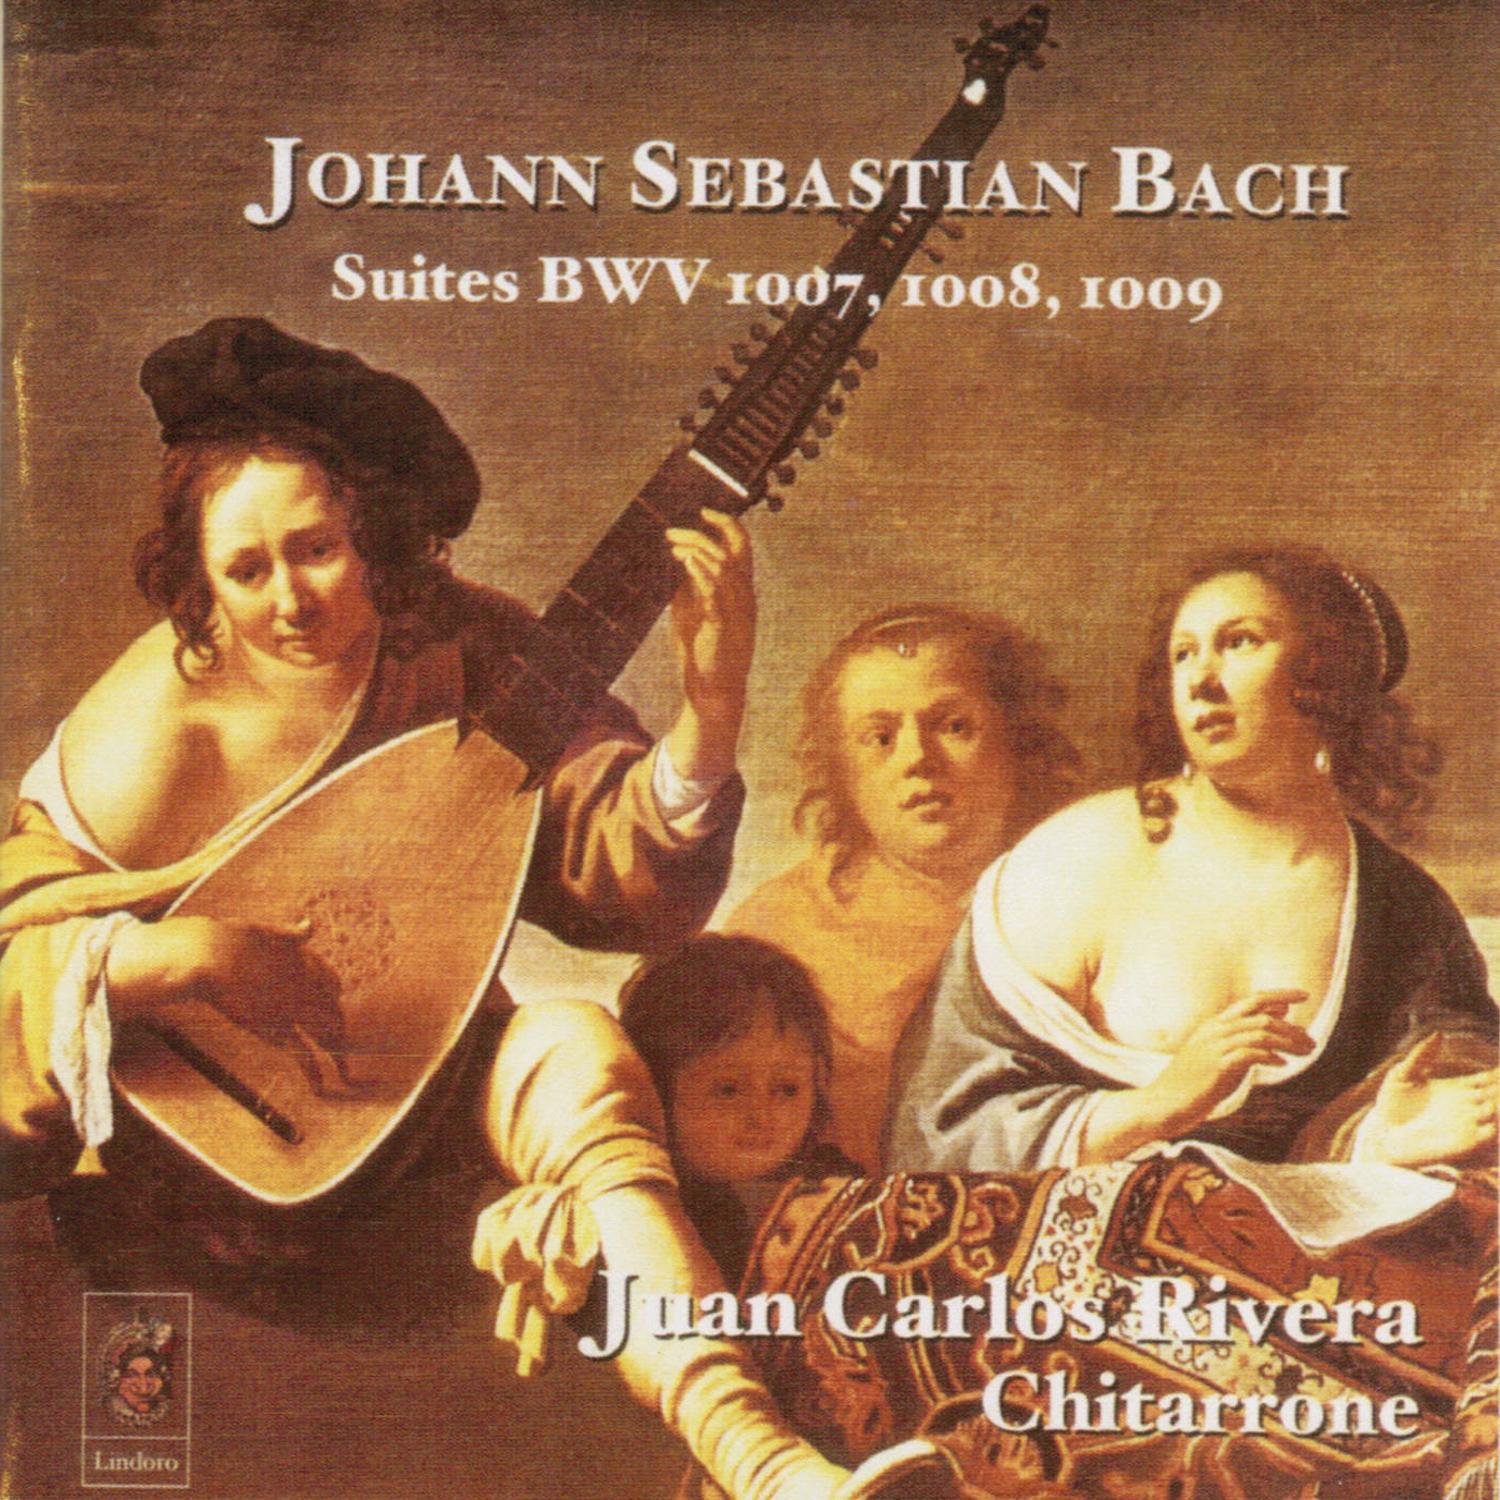 Johann Sebastian Bach - Suites BWV 1007, 1008, 1009